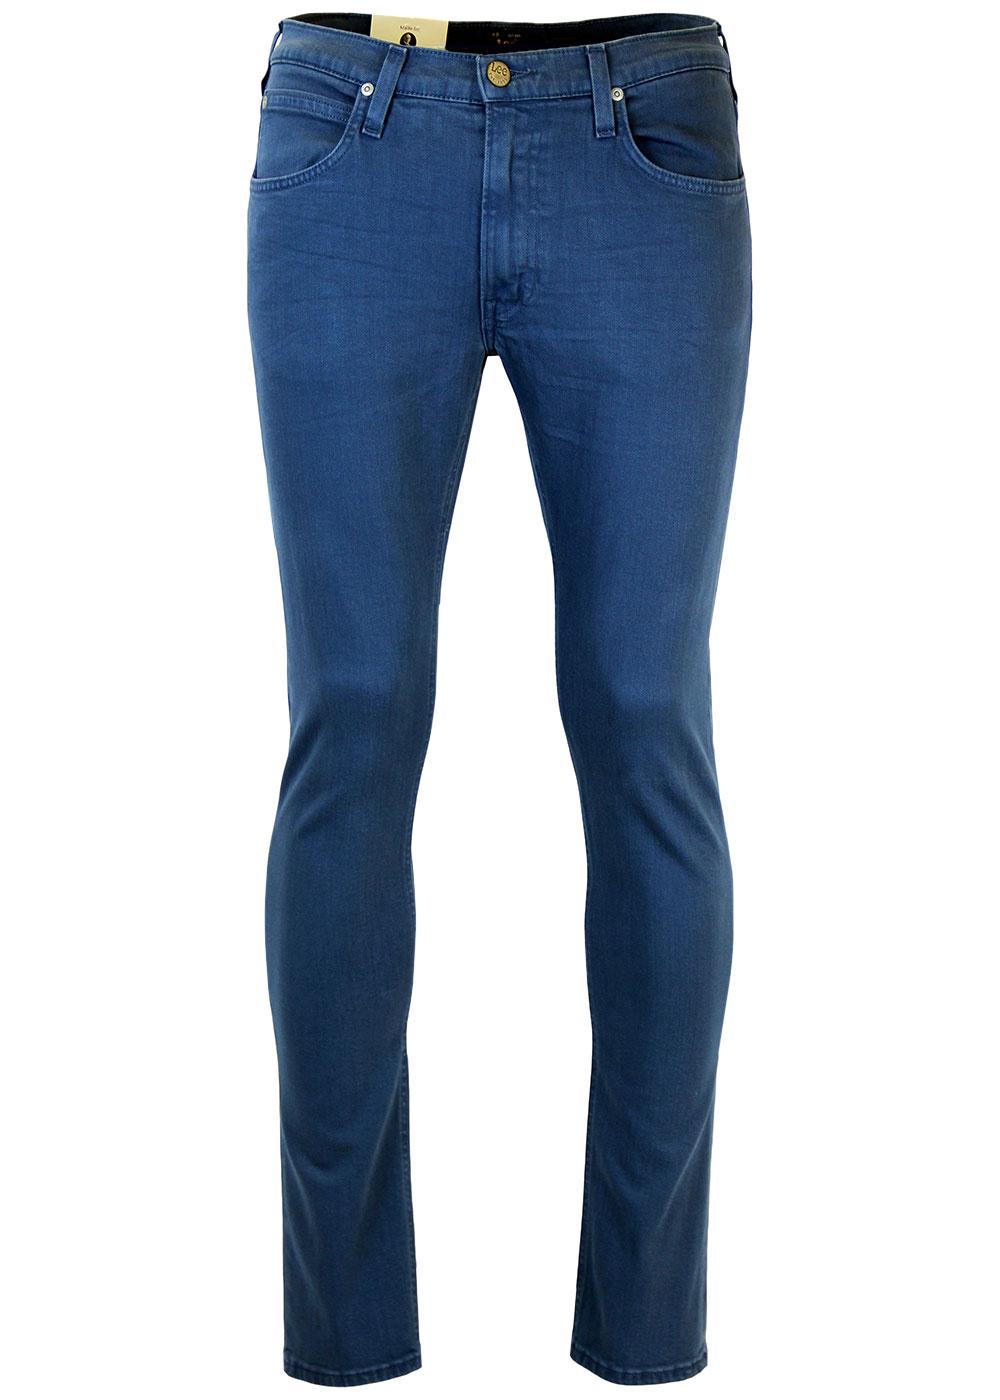 LEE Luke Retro Indie Mod Slim Tapered Denim Jeans in Bright Blue